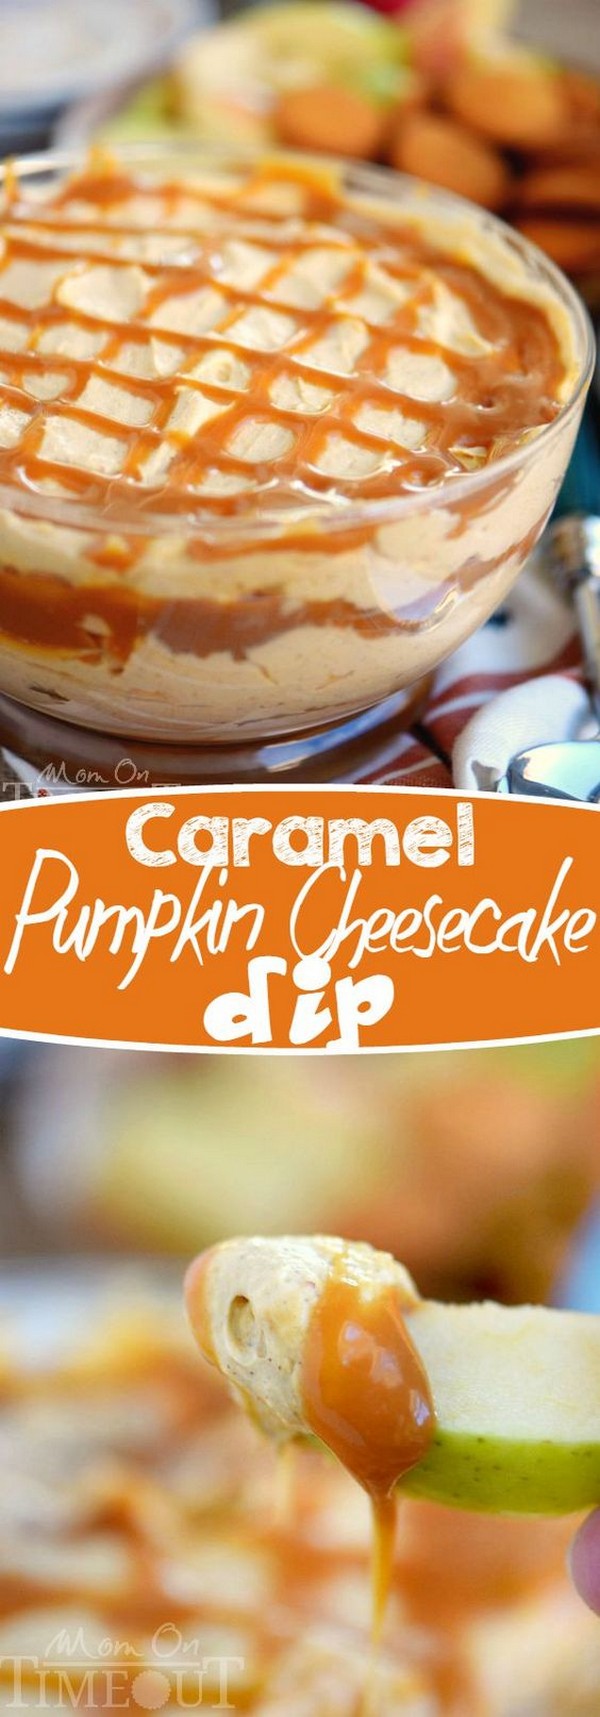 Caramel Pumpkin Cheesecake Dip